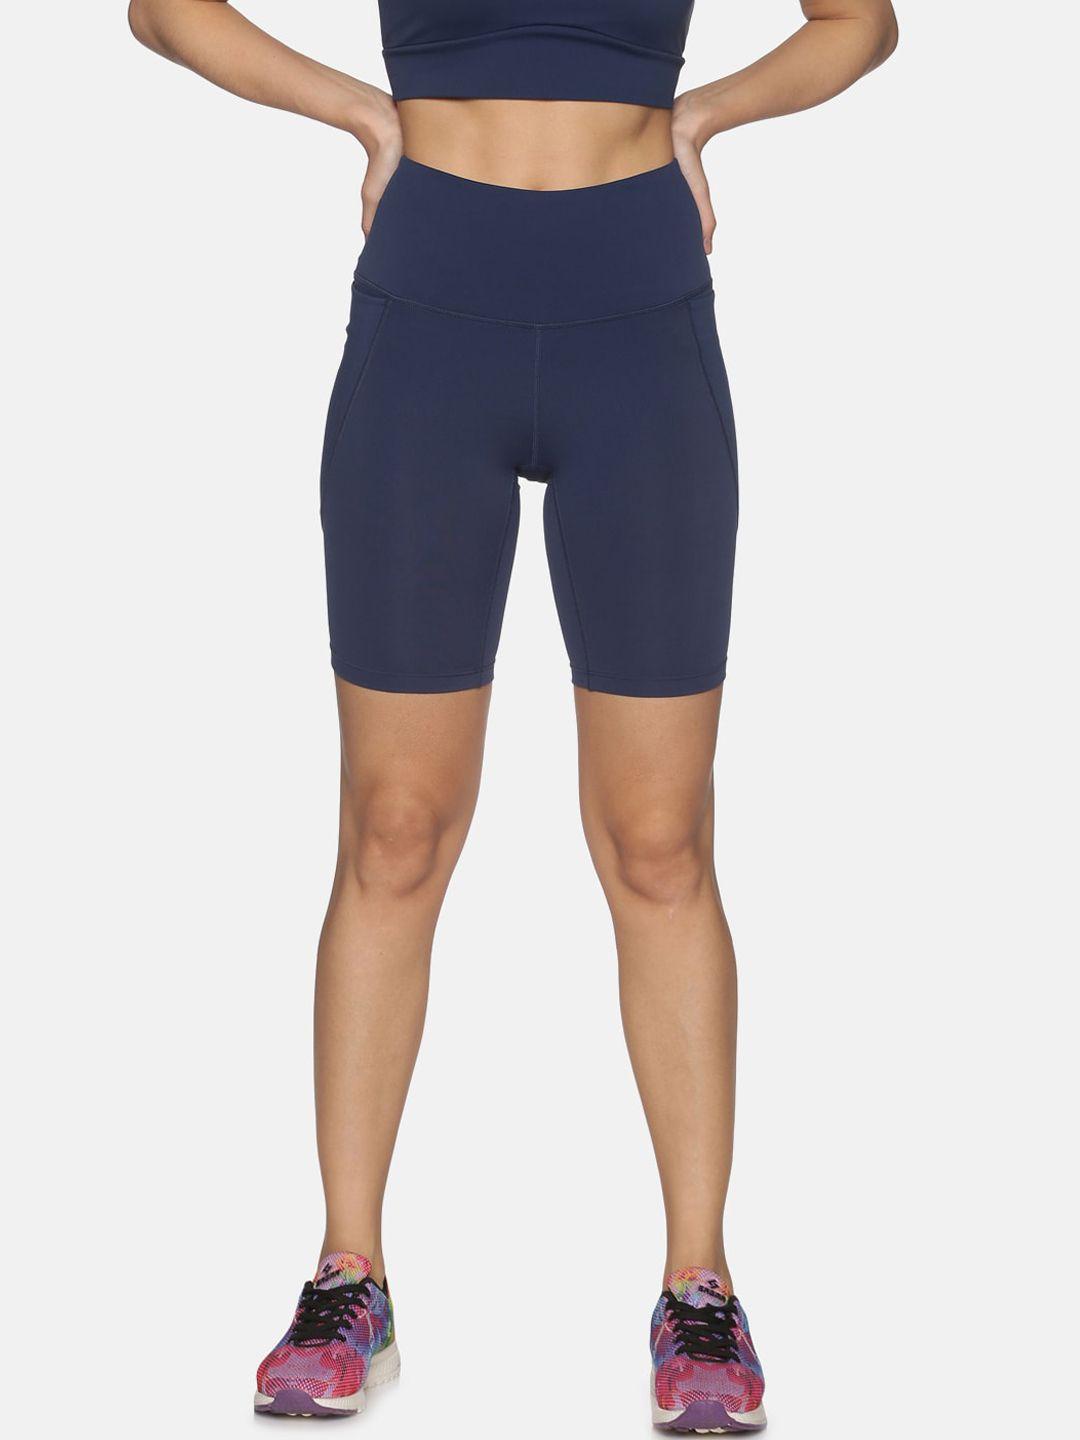 blissclub-women-navy-blue-high-waist-the-ultimate-cycling-shorts